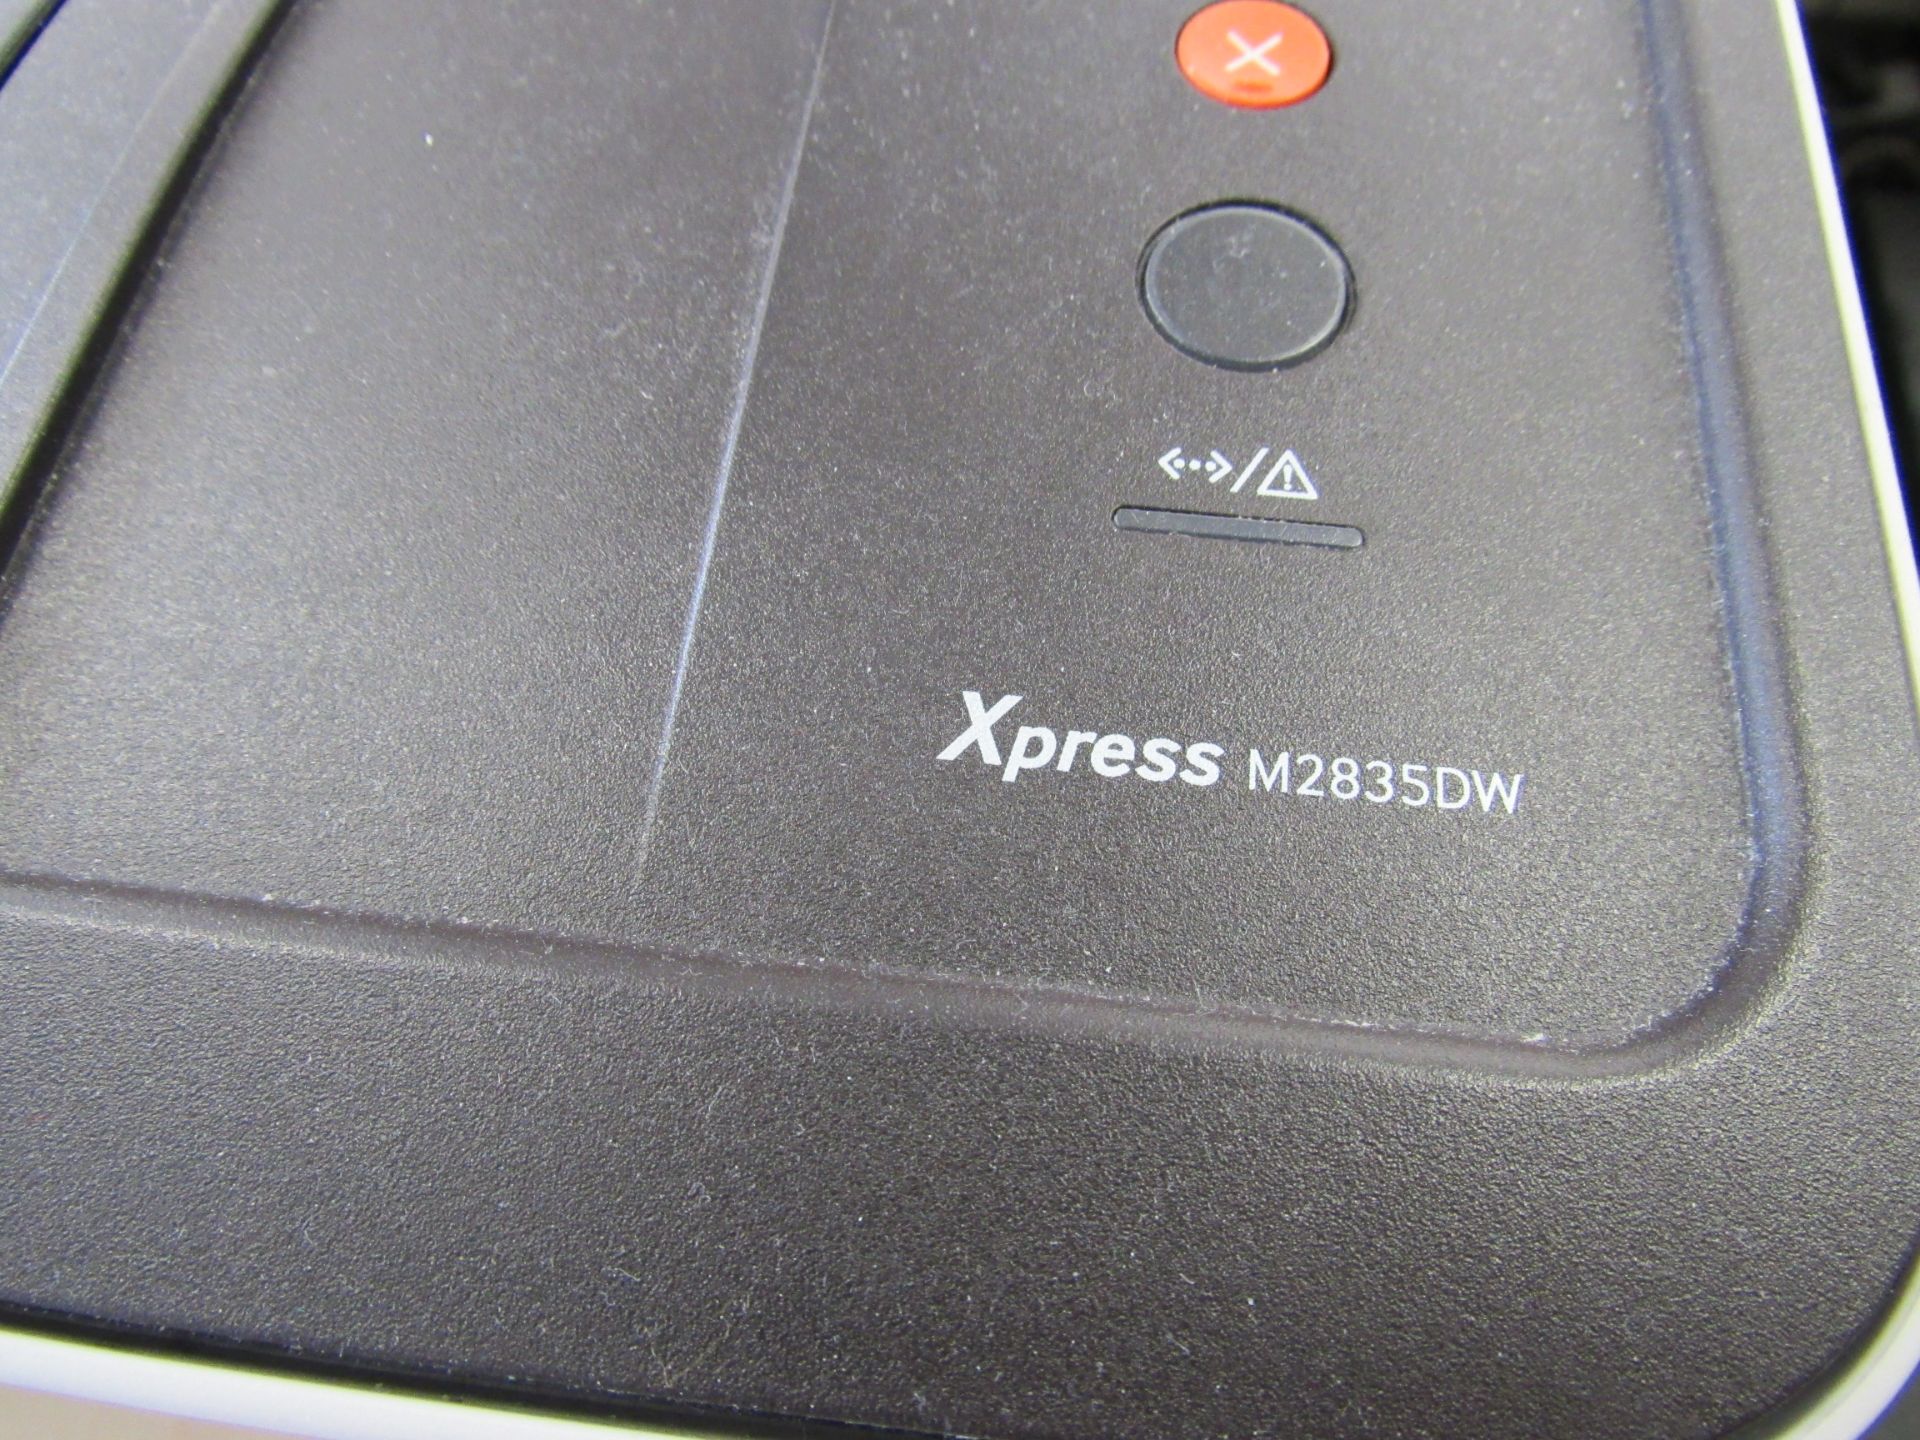 Samsung Xpress M2835DW printer - Image 3 of 3